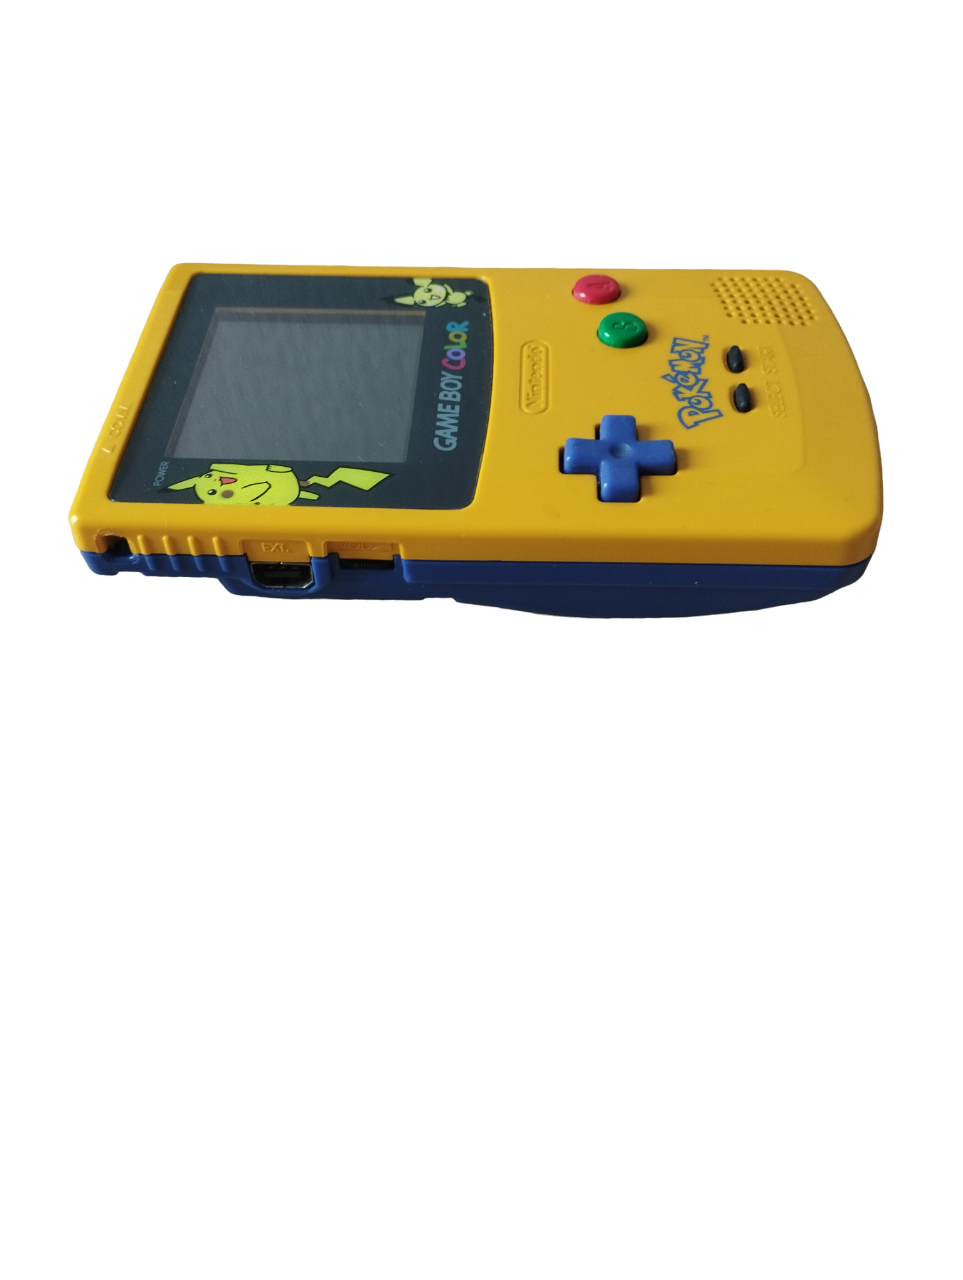 Console NINTENDO Game Boy Color Jaune d'occasion